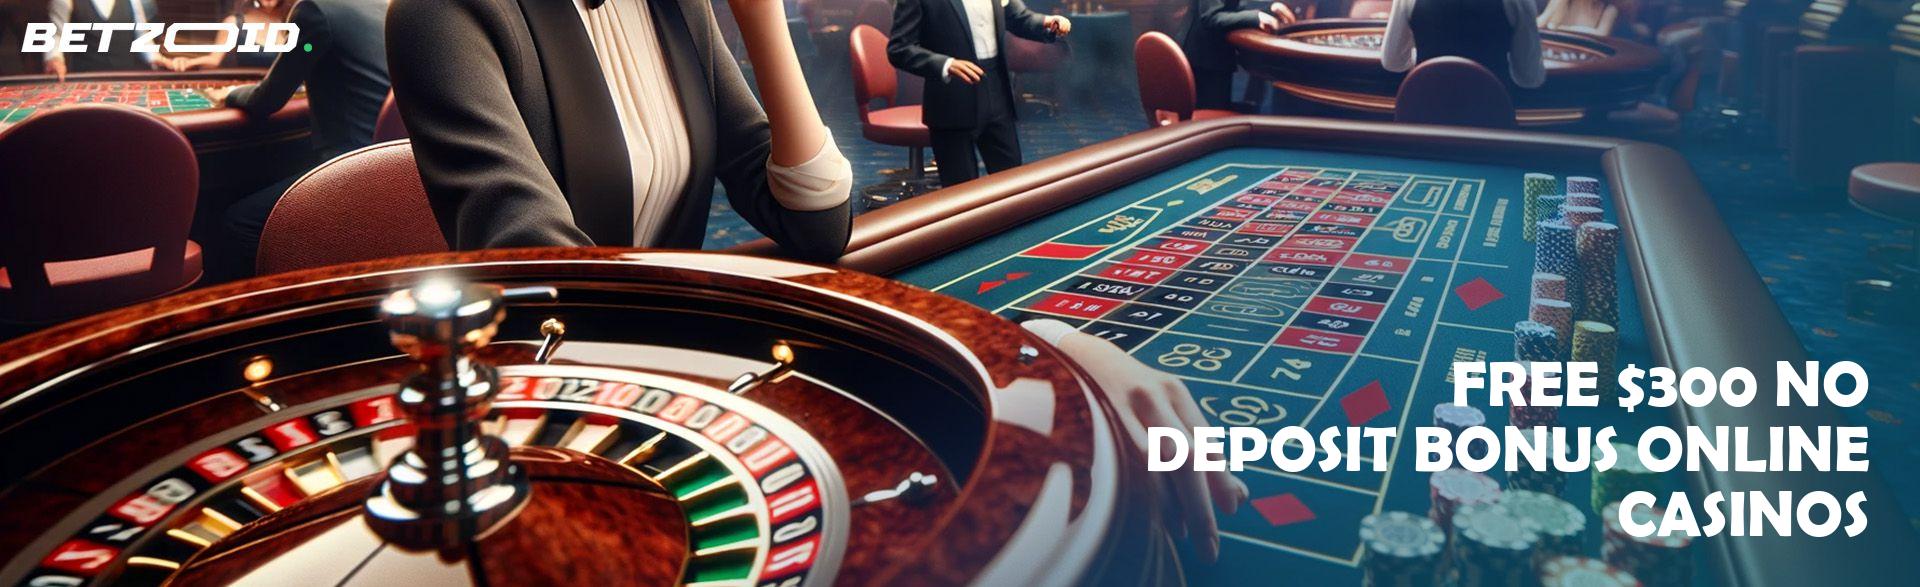 Free $300 No Deposit Bonus Online Casinos.